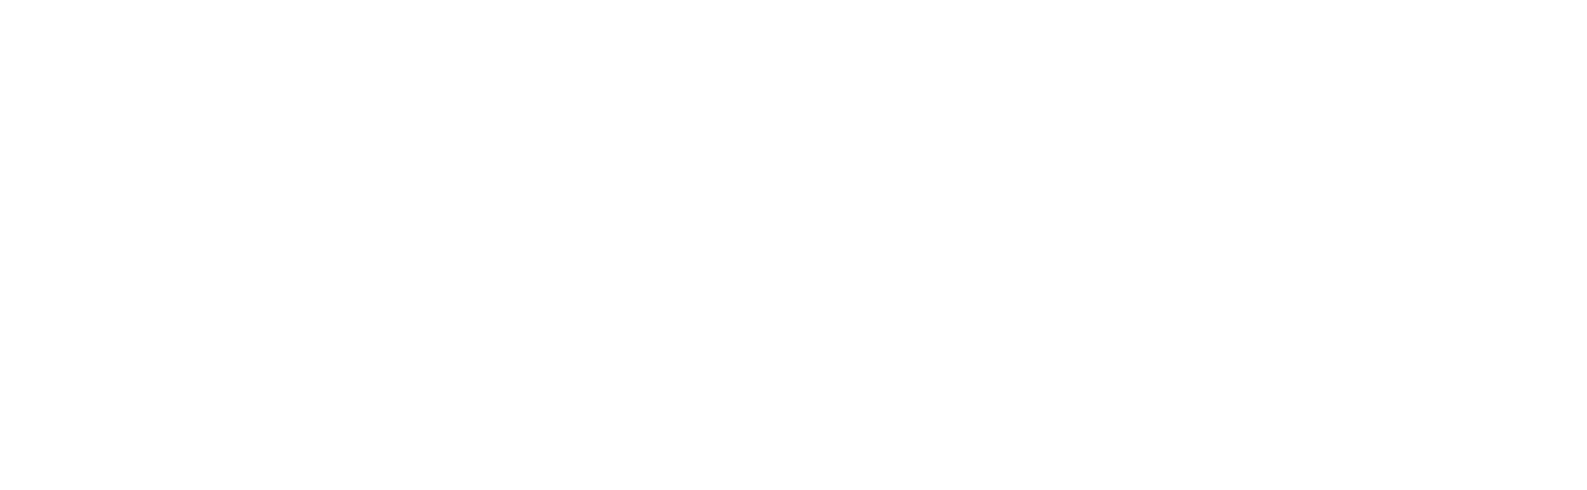 China Mobile logo large for dark backgrounds (transparent PNG)